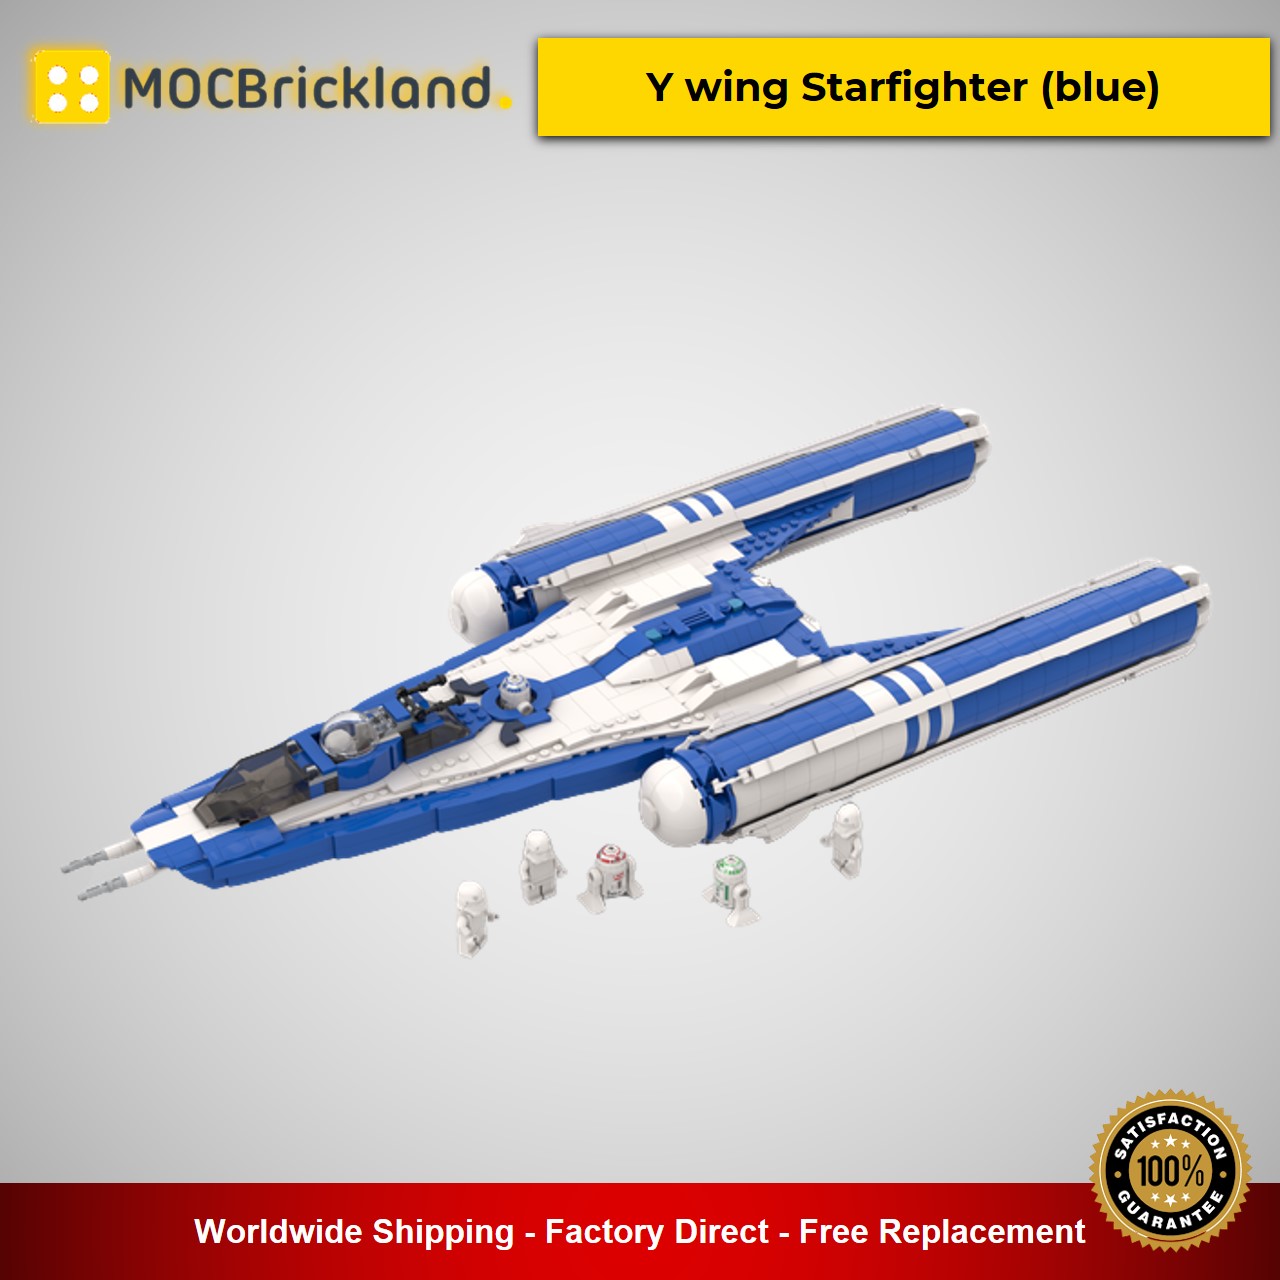 star wars moc 55736 y wing starfighter blue by starwarsfan66 mocbrickland 5064